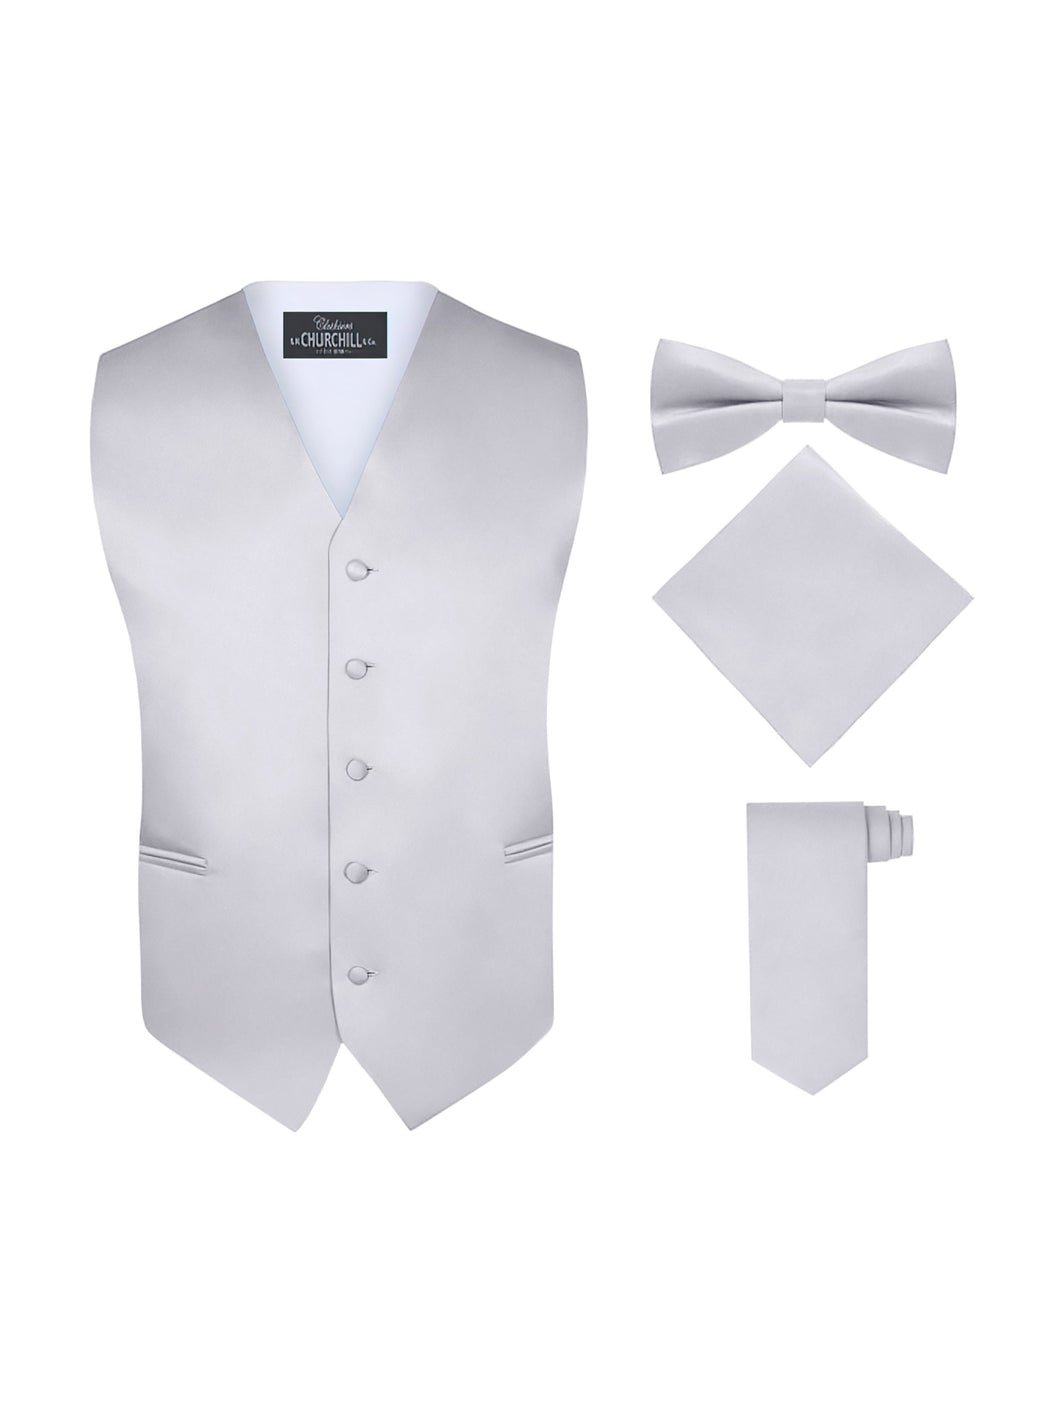 S.H. Churchill & Co. Men's 4 Piece Silver Vest Set, with Bow Tie, Neck Tie & Pocket Hankie